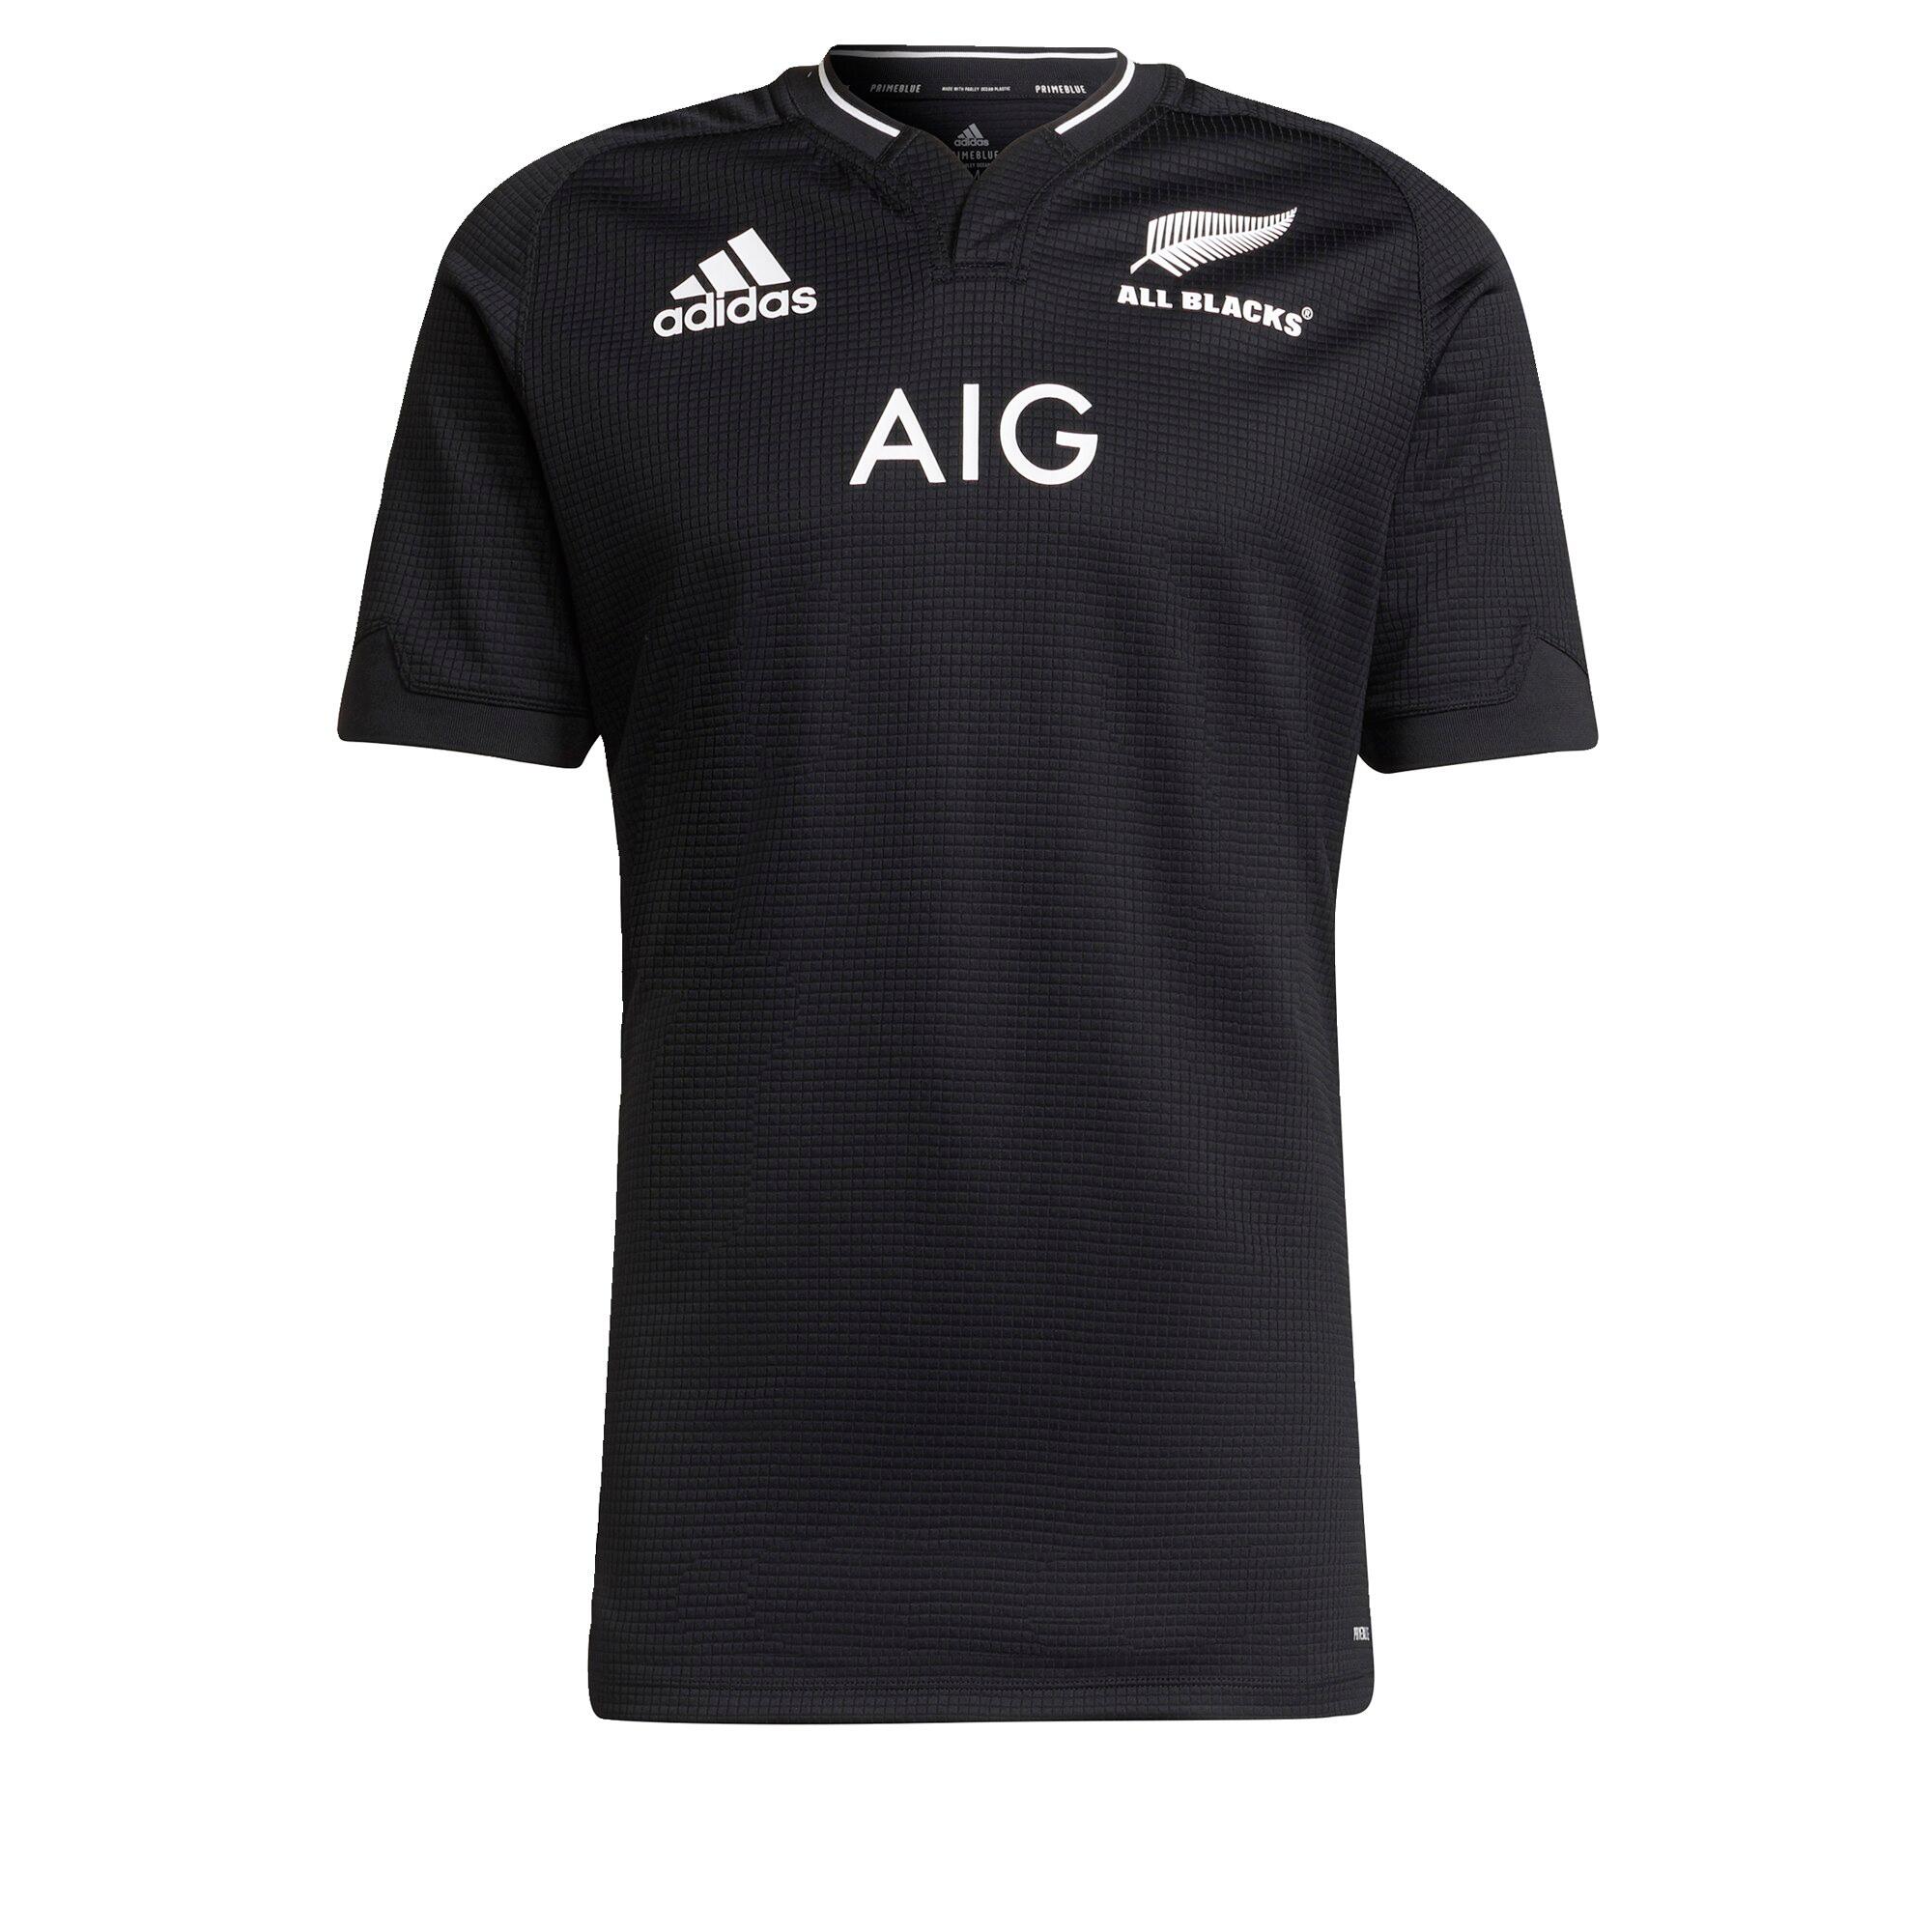 adidas New Zealand All Blacks Home Rugby Shirt Adults GU1915 Black 1/5